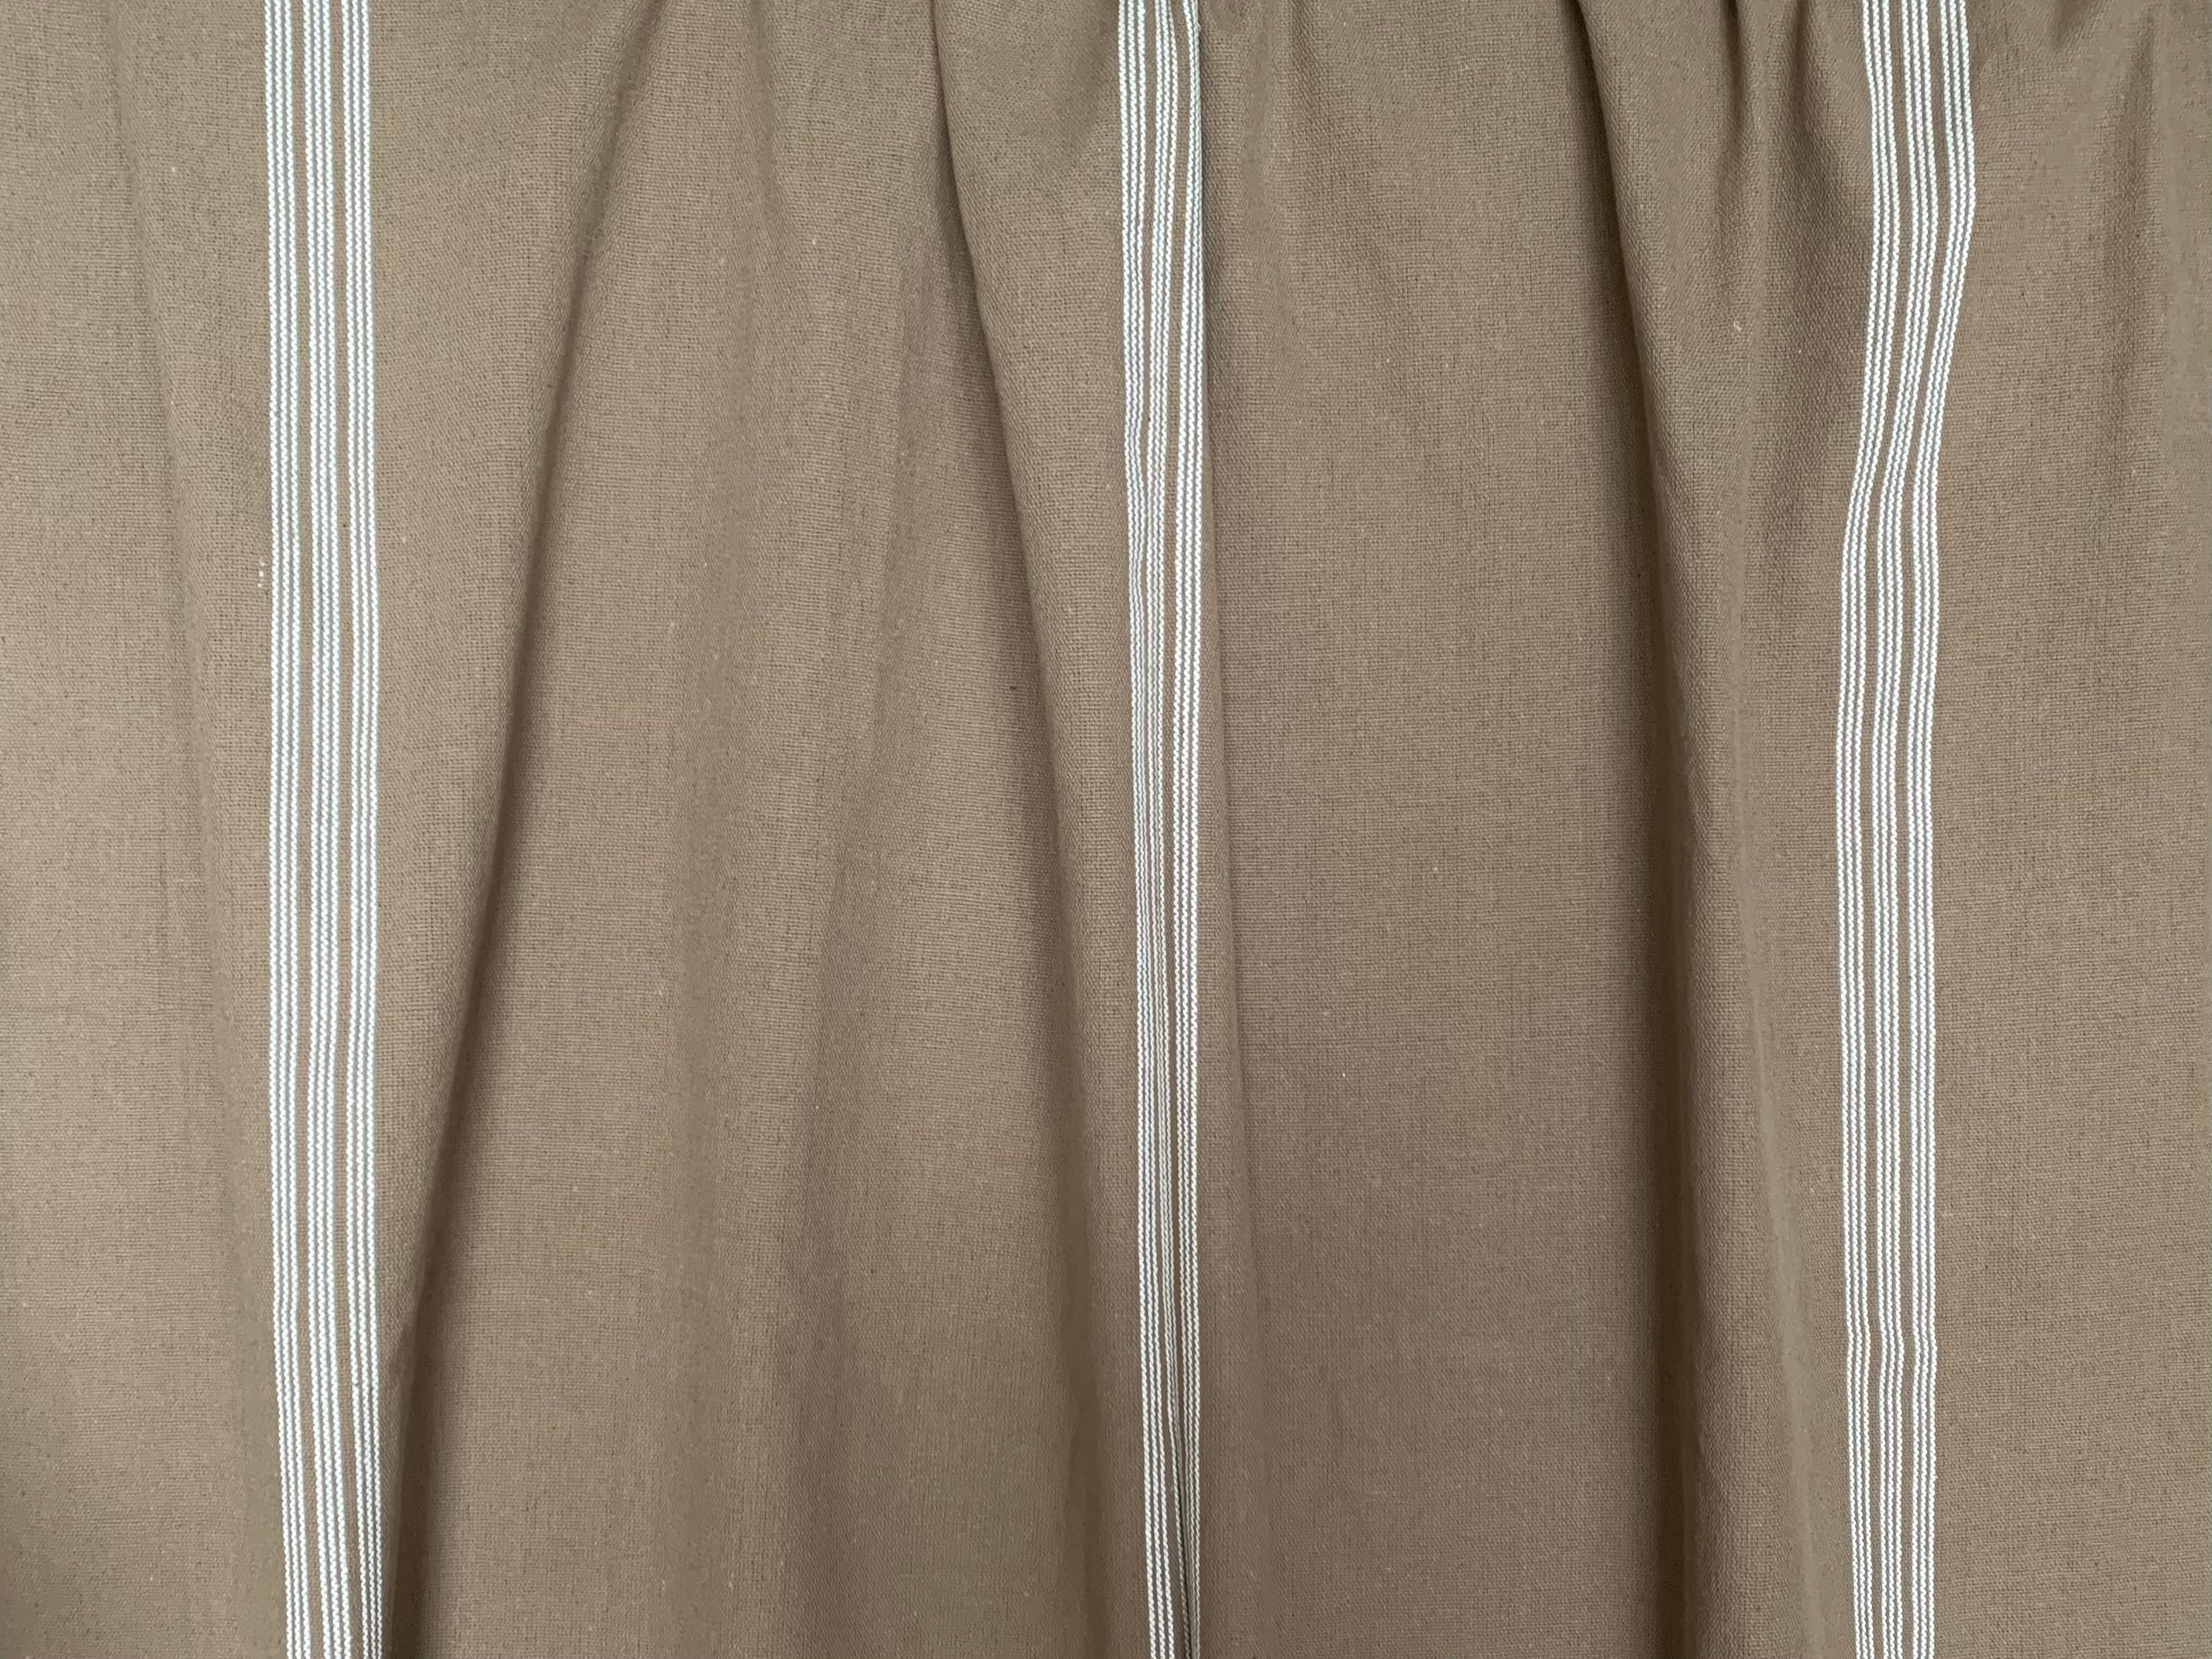 Grain Sack Fabric - White Stripes on Brown/Taupe